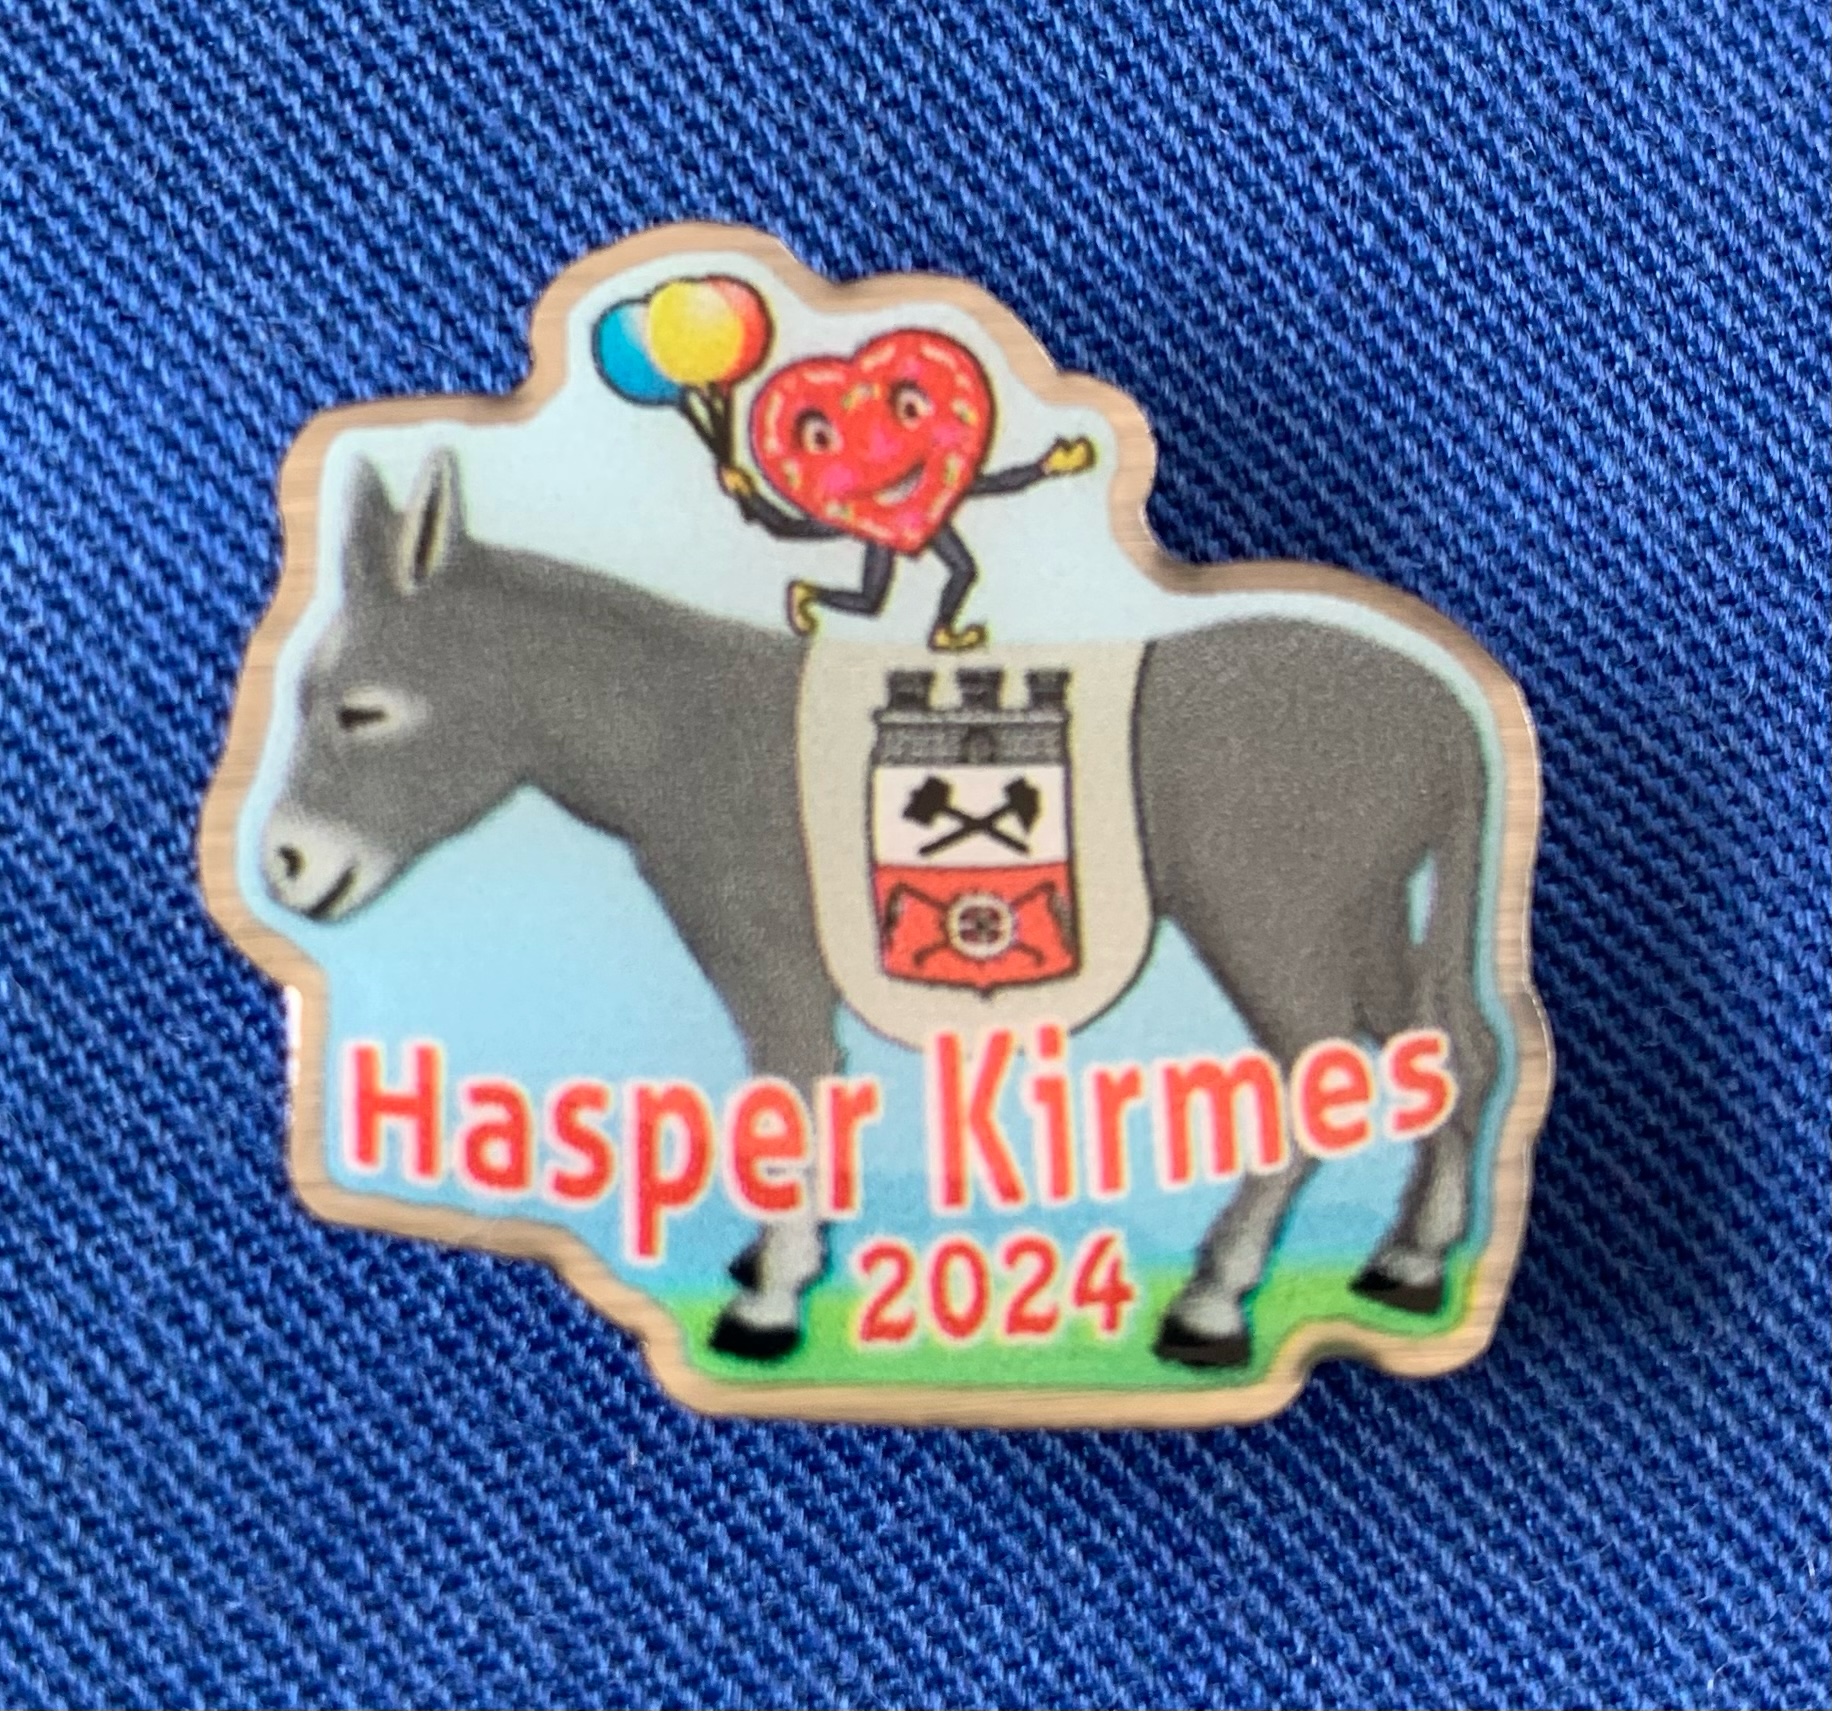 Der neue Pin zeigt den Hasper Kirmes-Esel